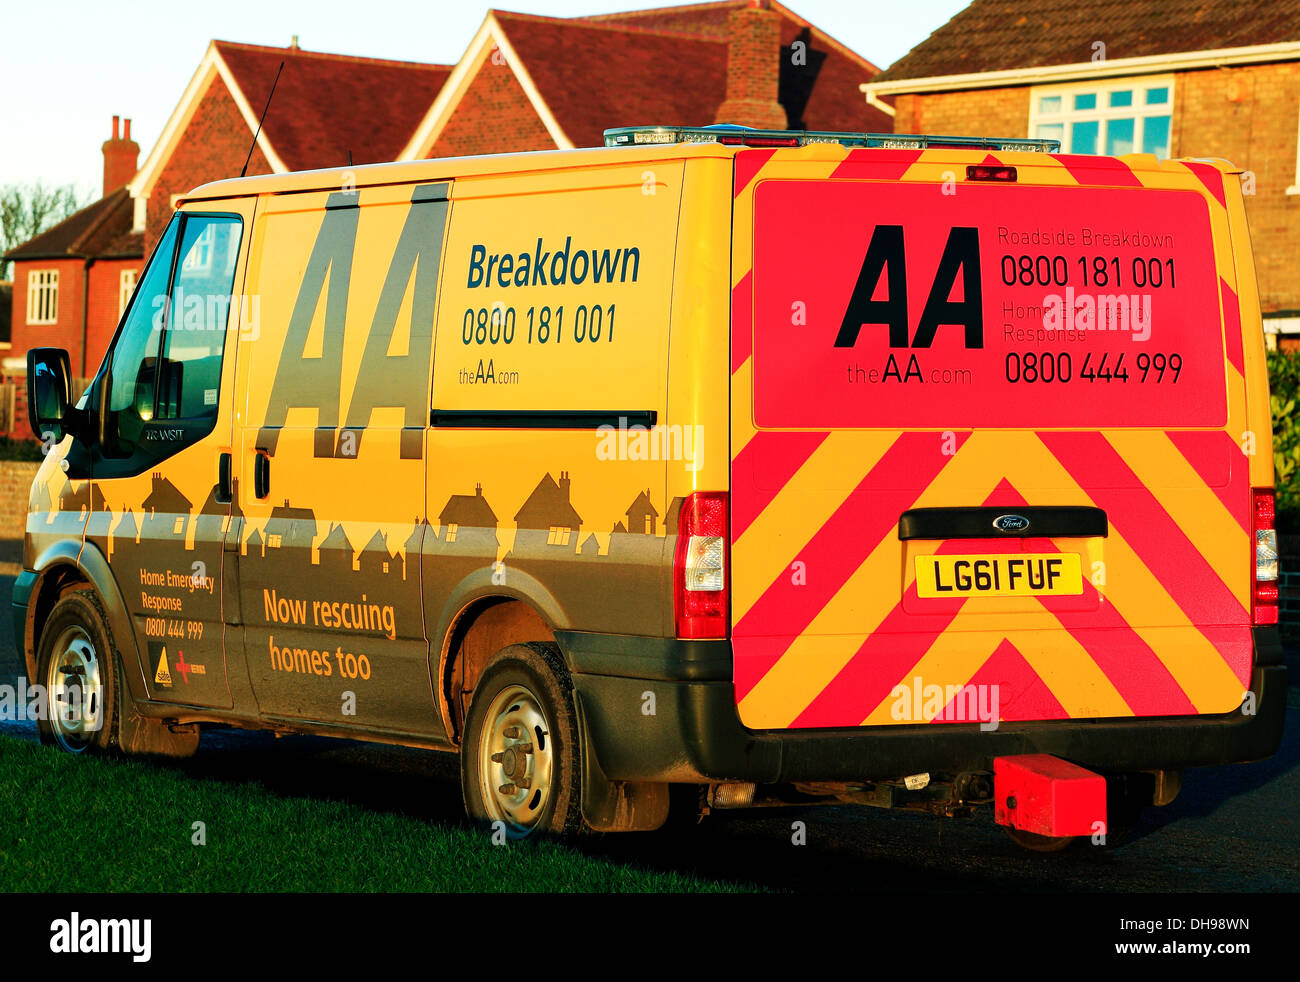 AA Breakdown vehicle England UK, home emergency vehicles roadside Stock Photo